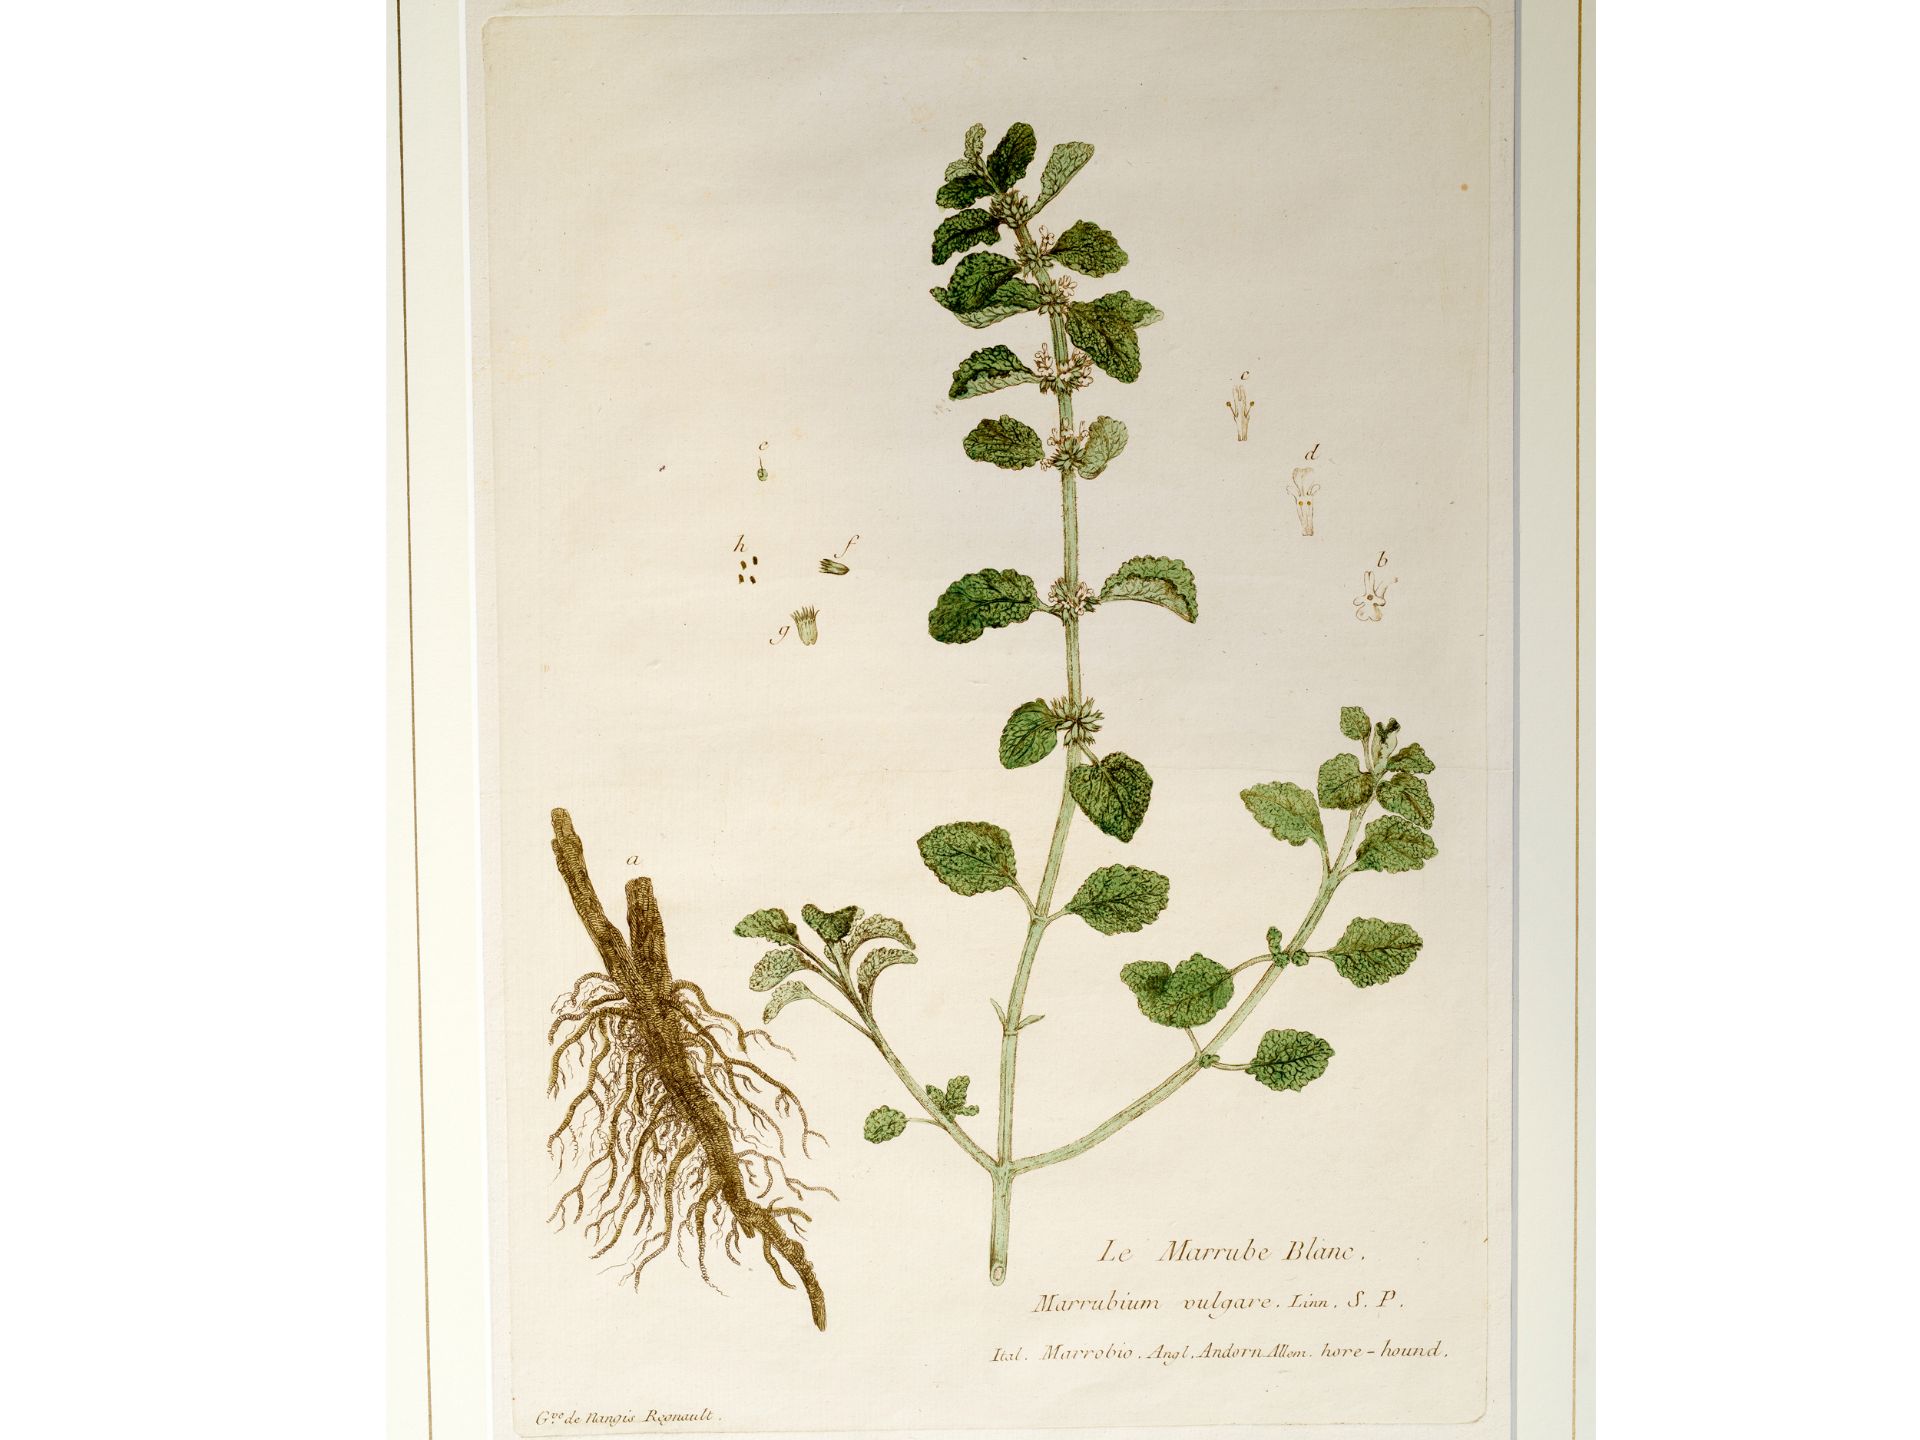 „Le Marrube Blanc“, Tafel aus botanischem Manuskript